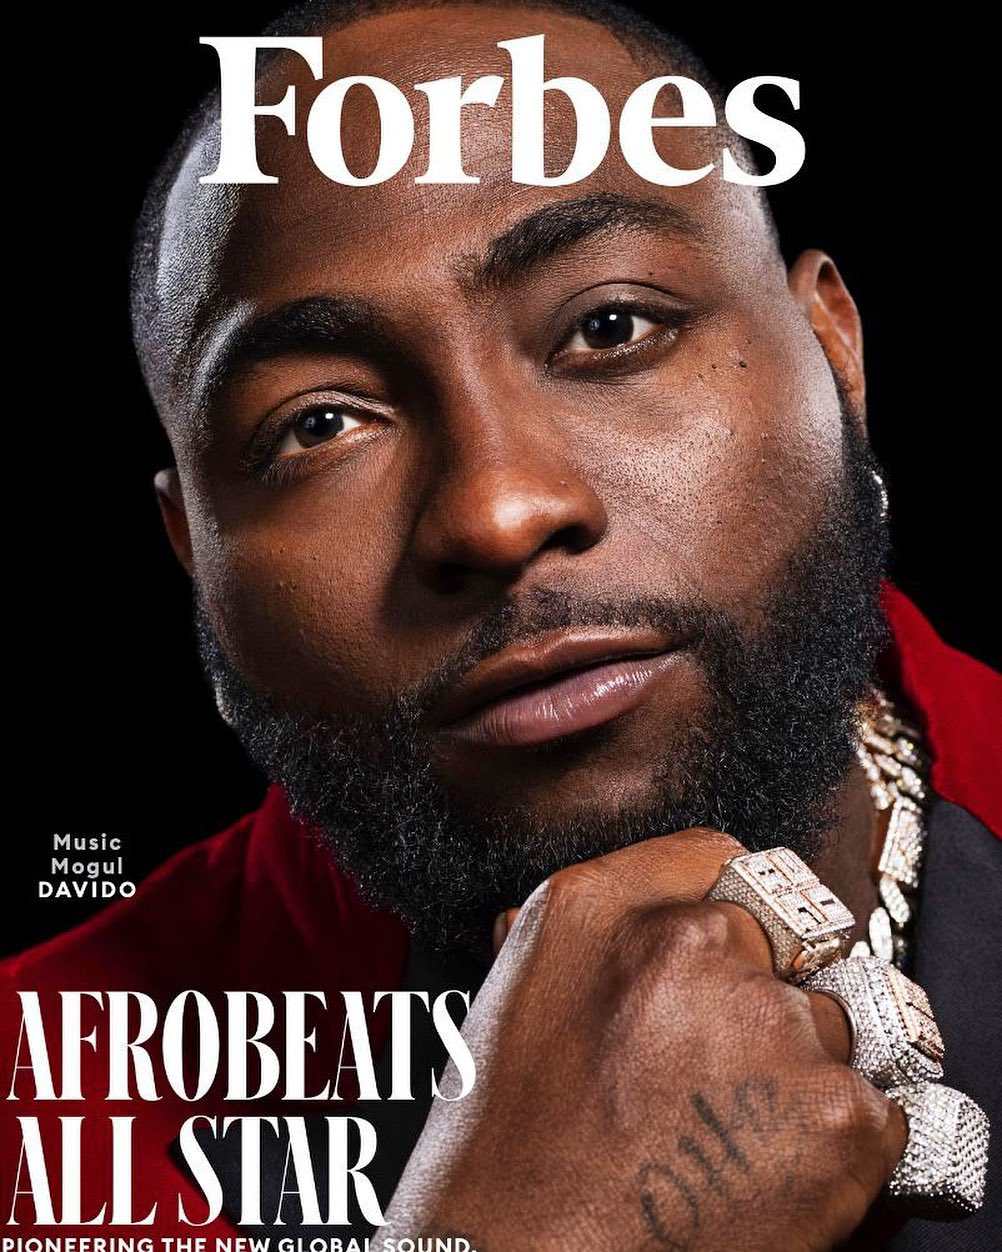 Davido covers Forbes magazine